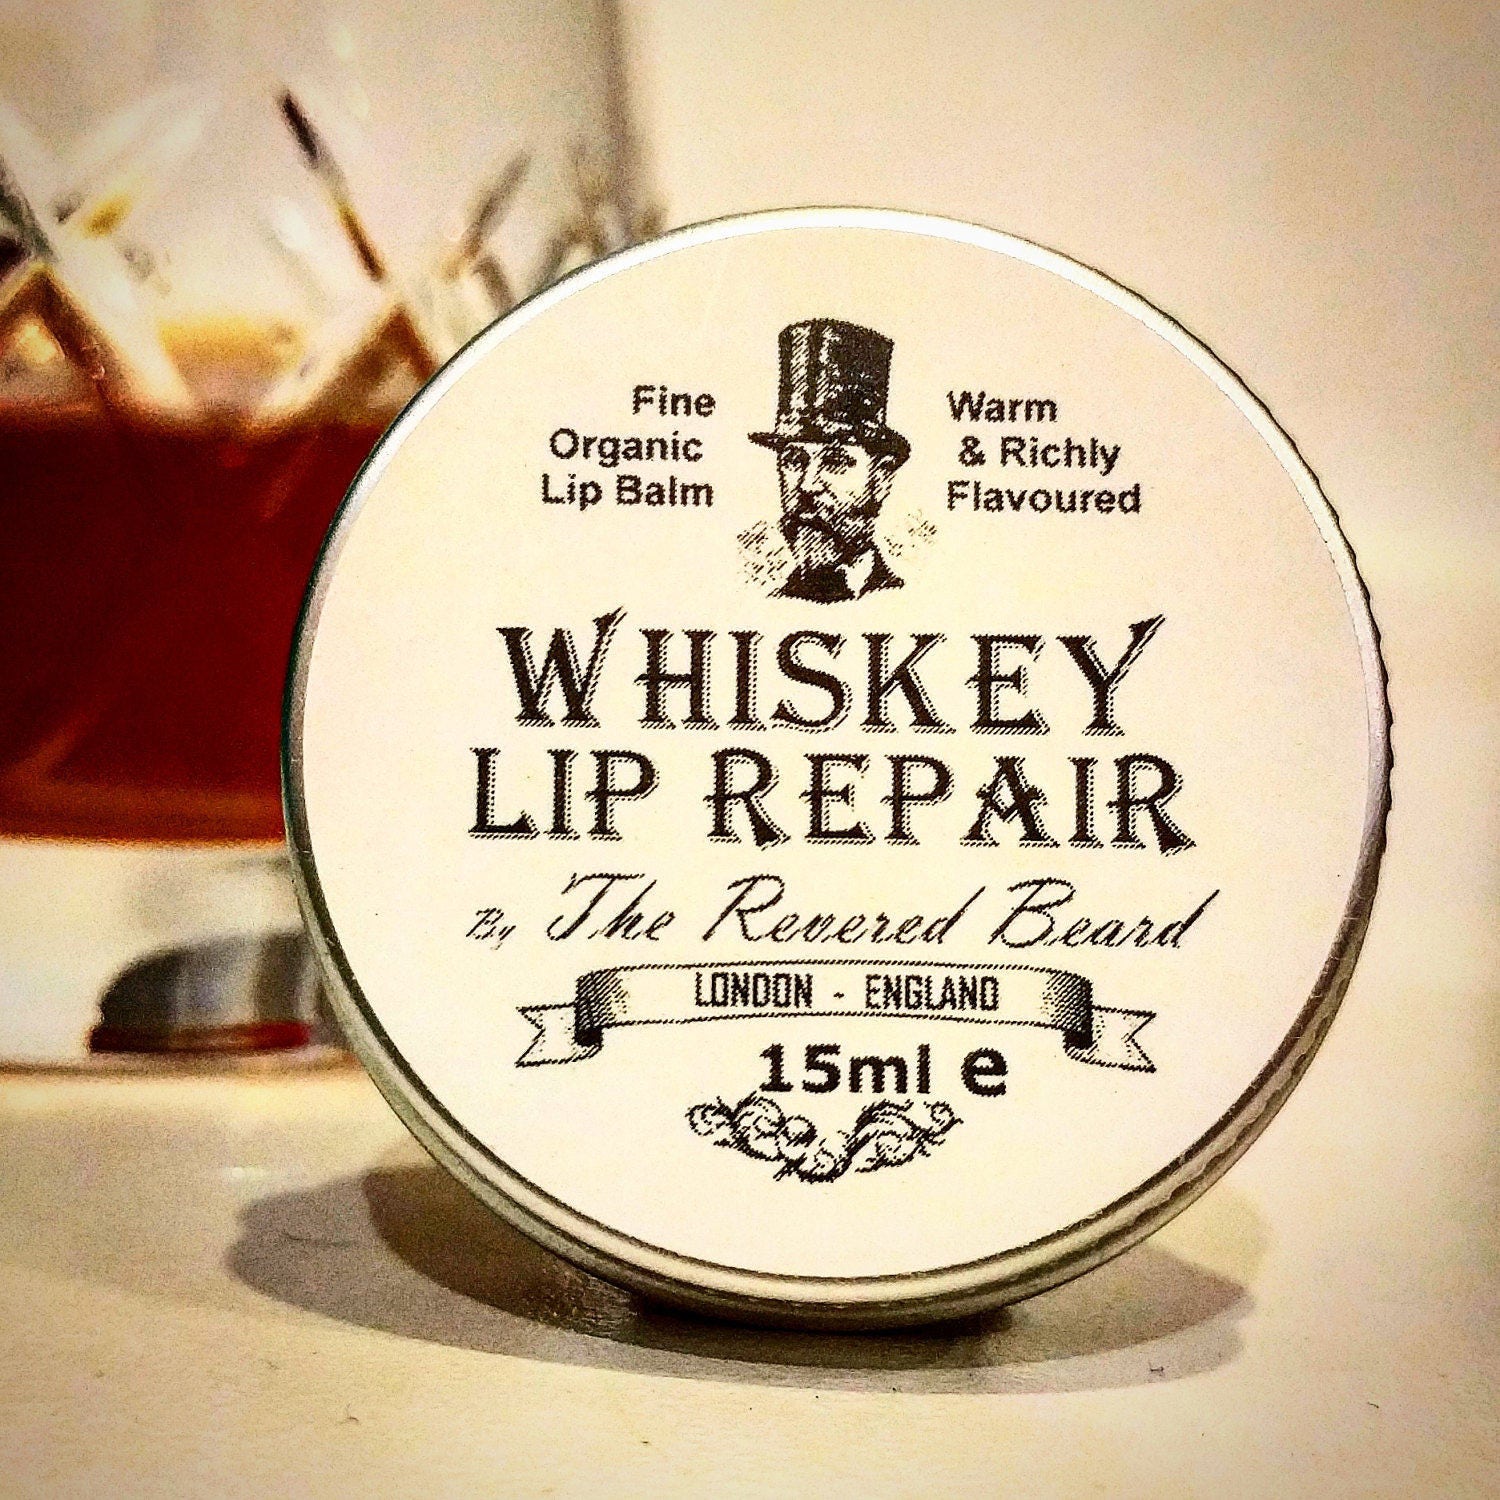 Whiskey-Flavored Lip Repair 